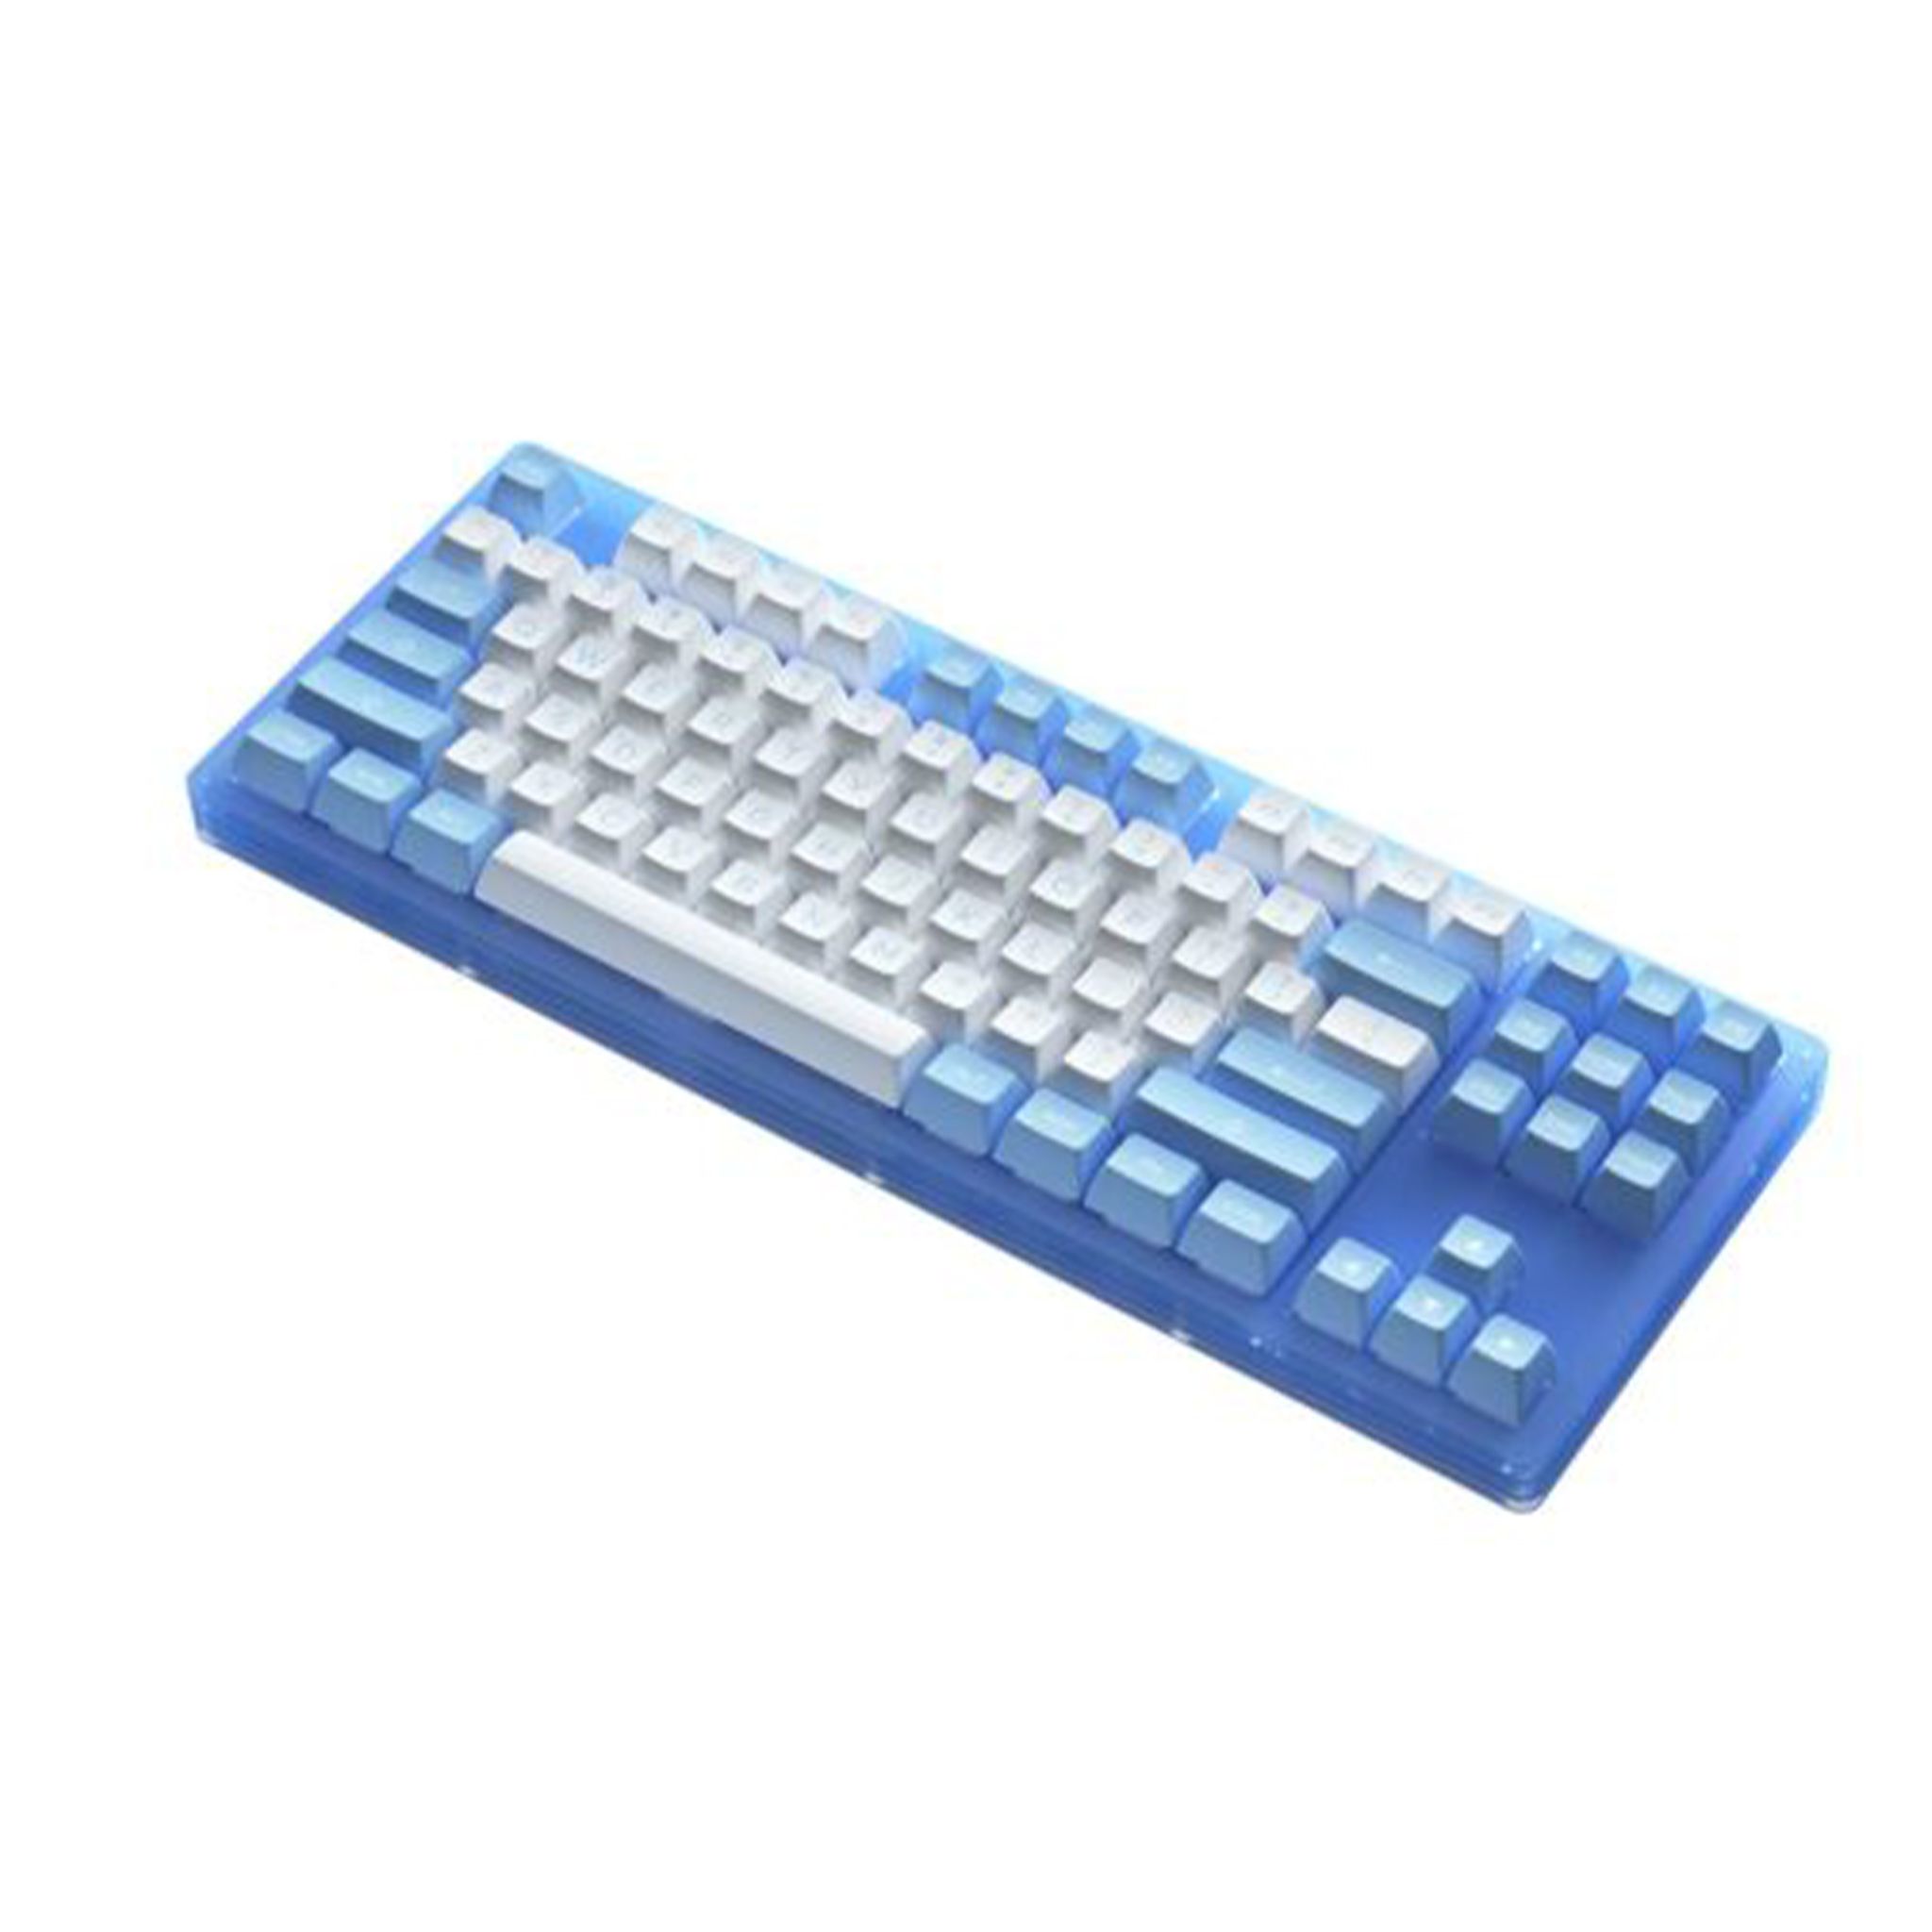  Bàn phím cơ AKKO ACR87 Blue (Hotswap / RGB / AKKO CS sw Jelly Blue) 